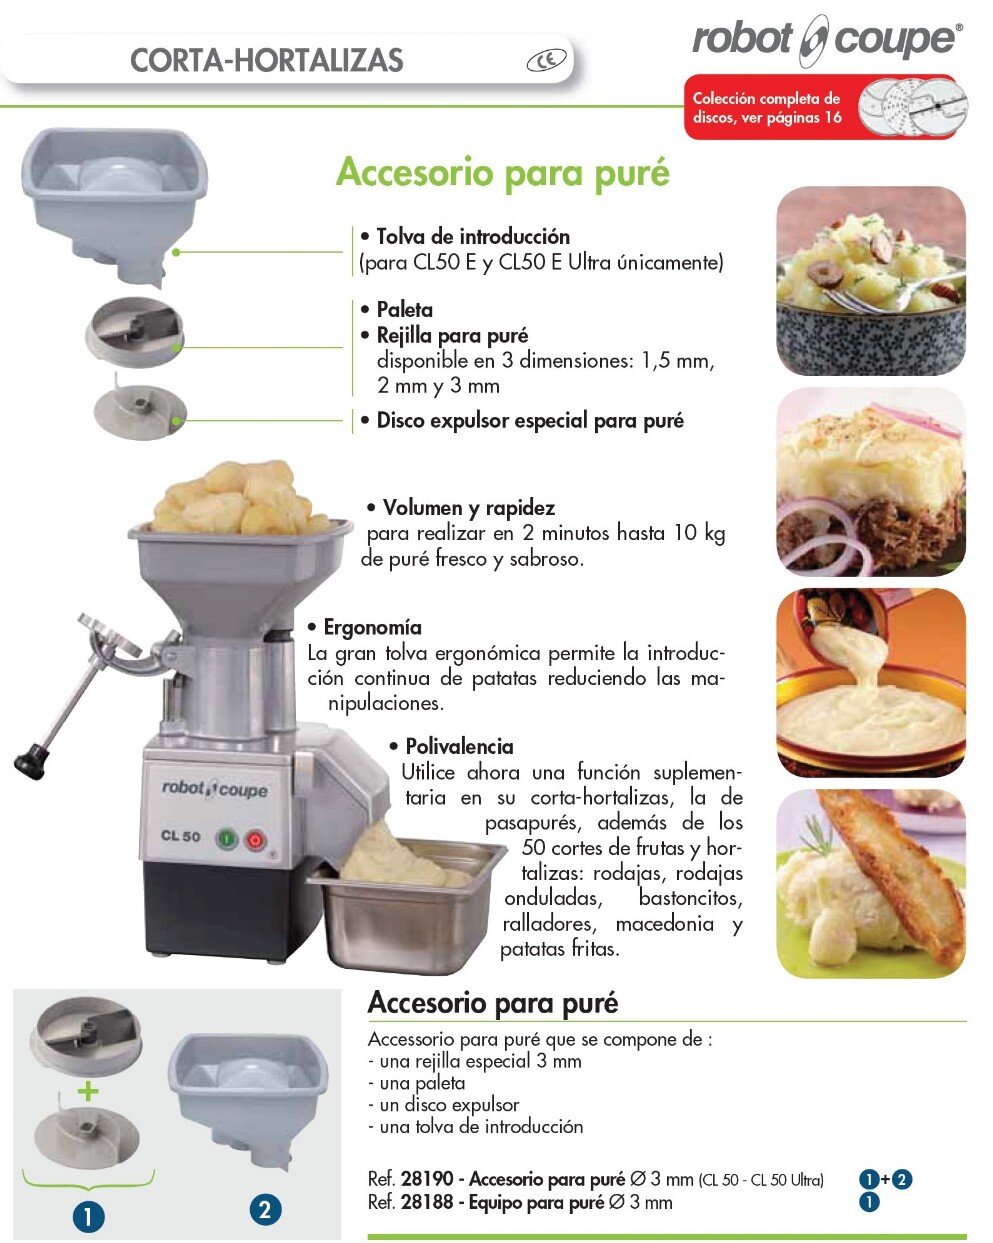 <img src="Cortadora hortalizas accesorio puré.jpg" alt="Cortadora hortalizas accesorio puré">